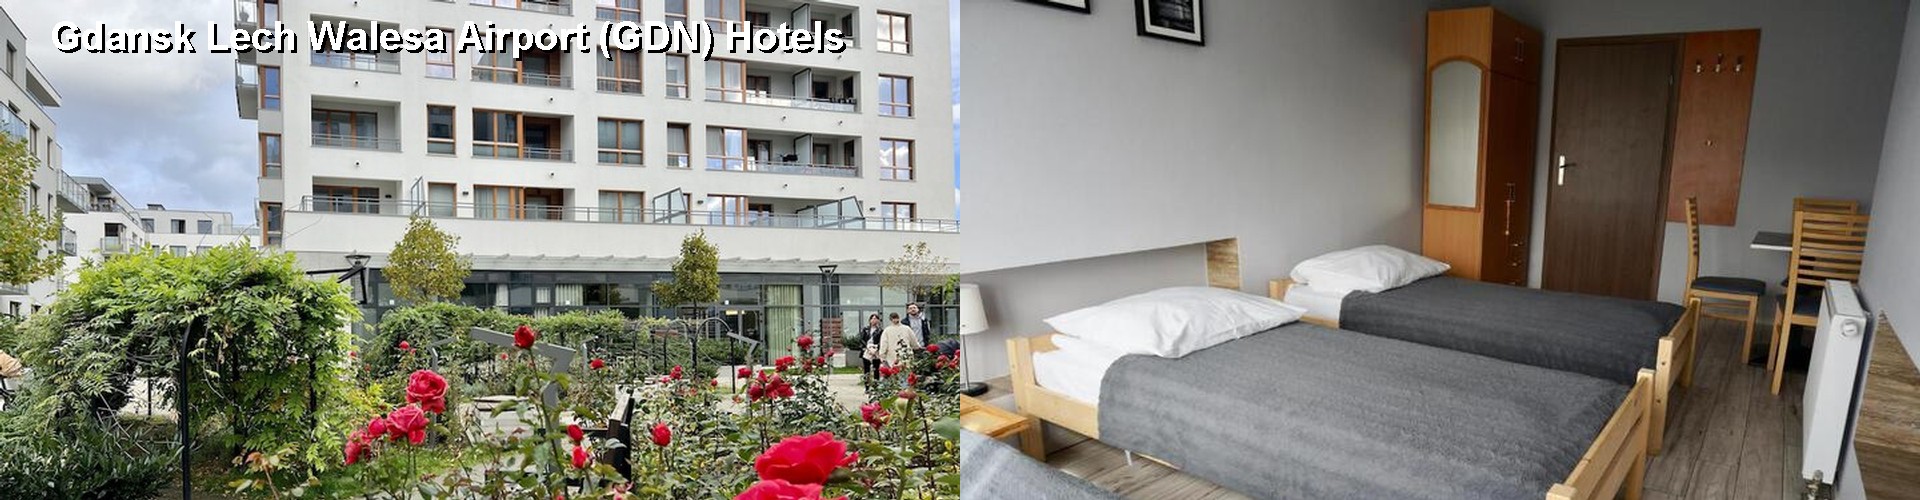 5 Best Hotels near Gdansk Lech Walesa Airport (GDN)